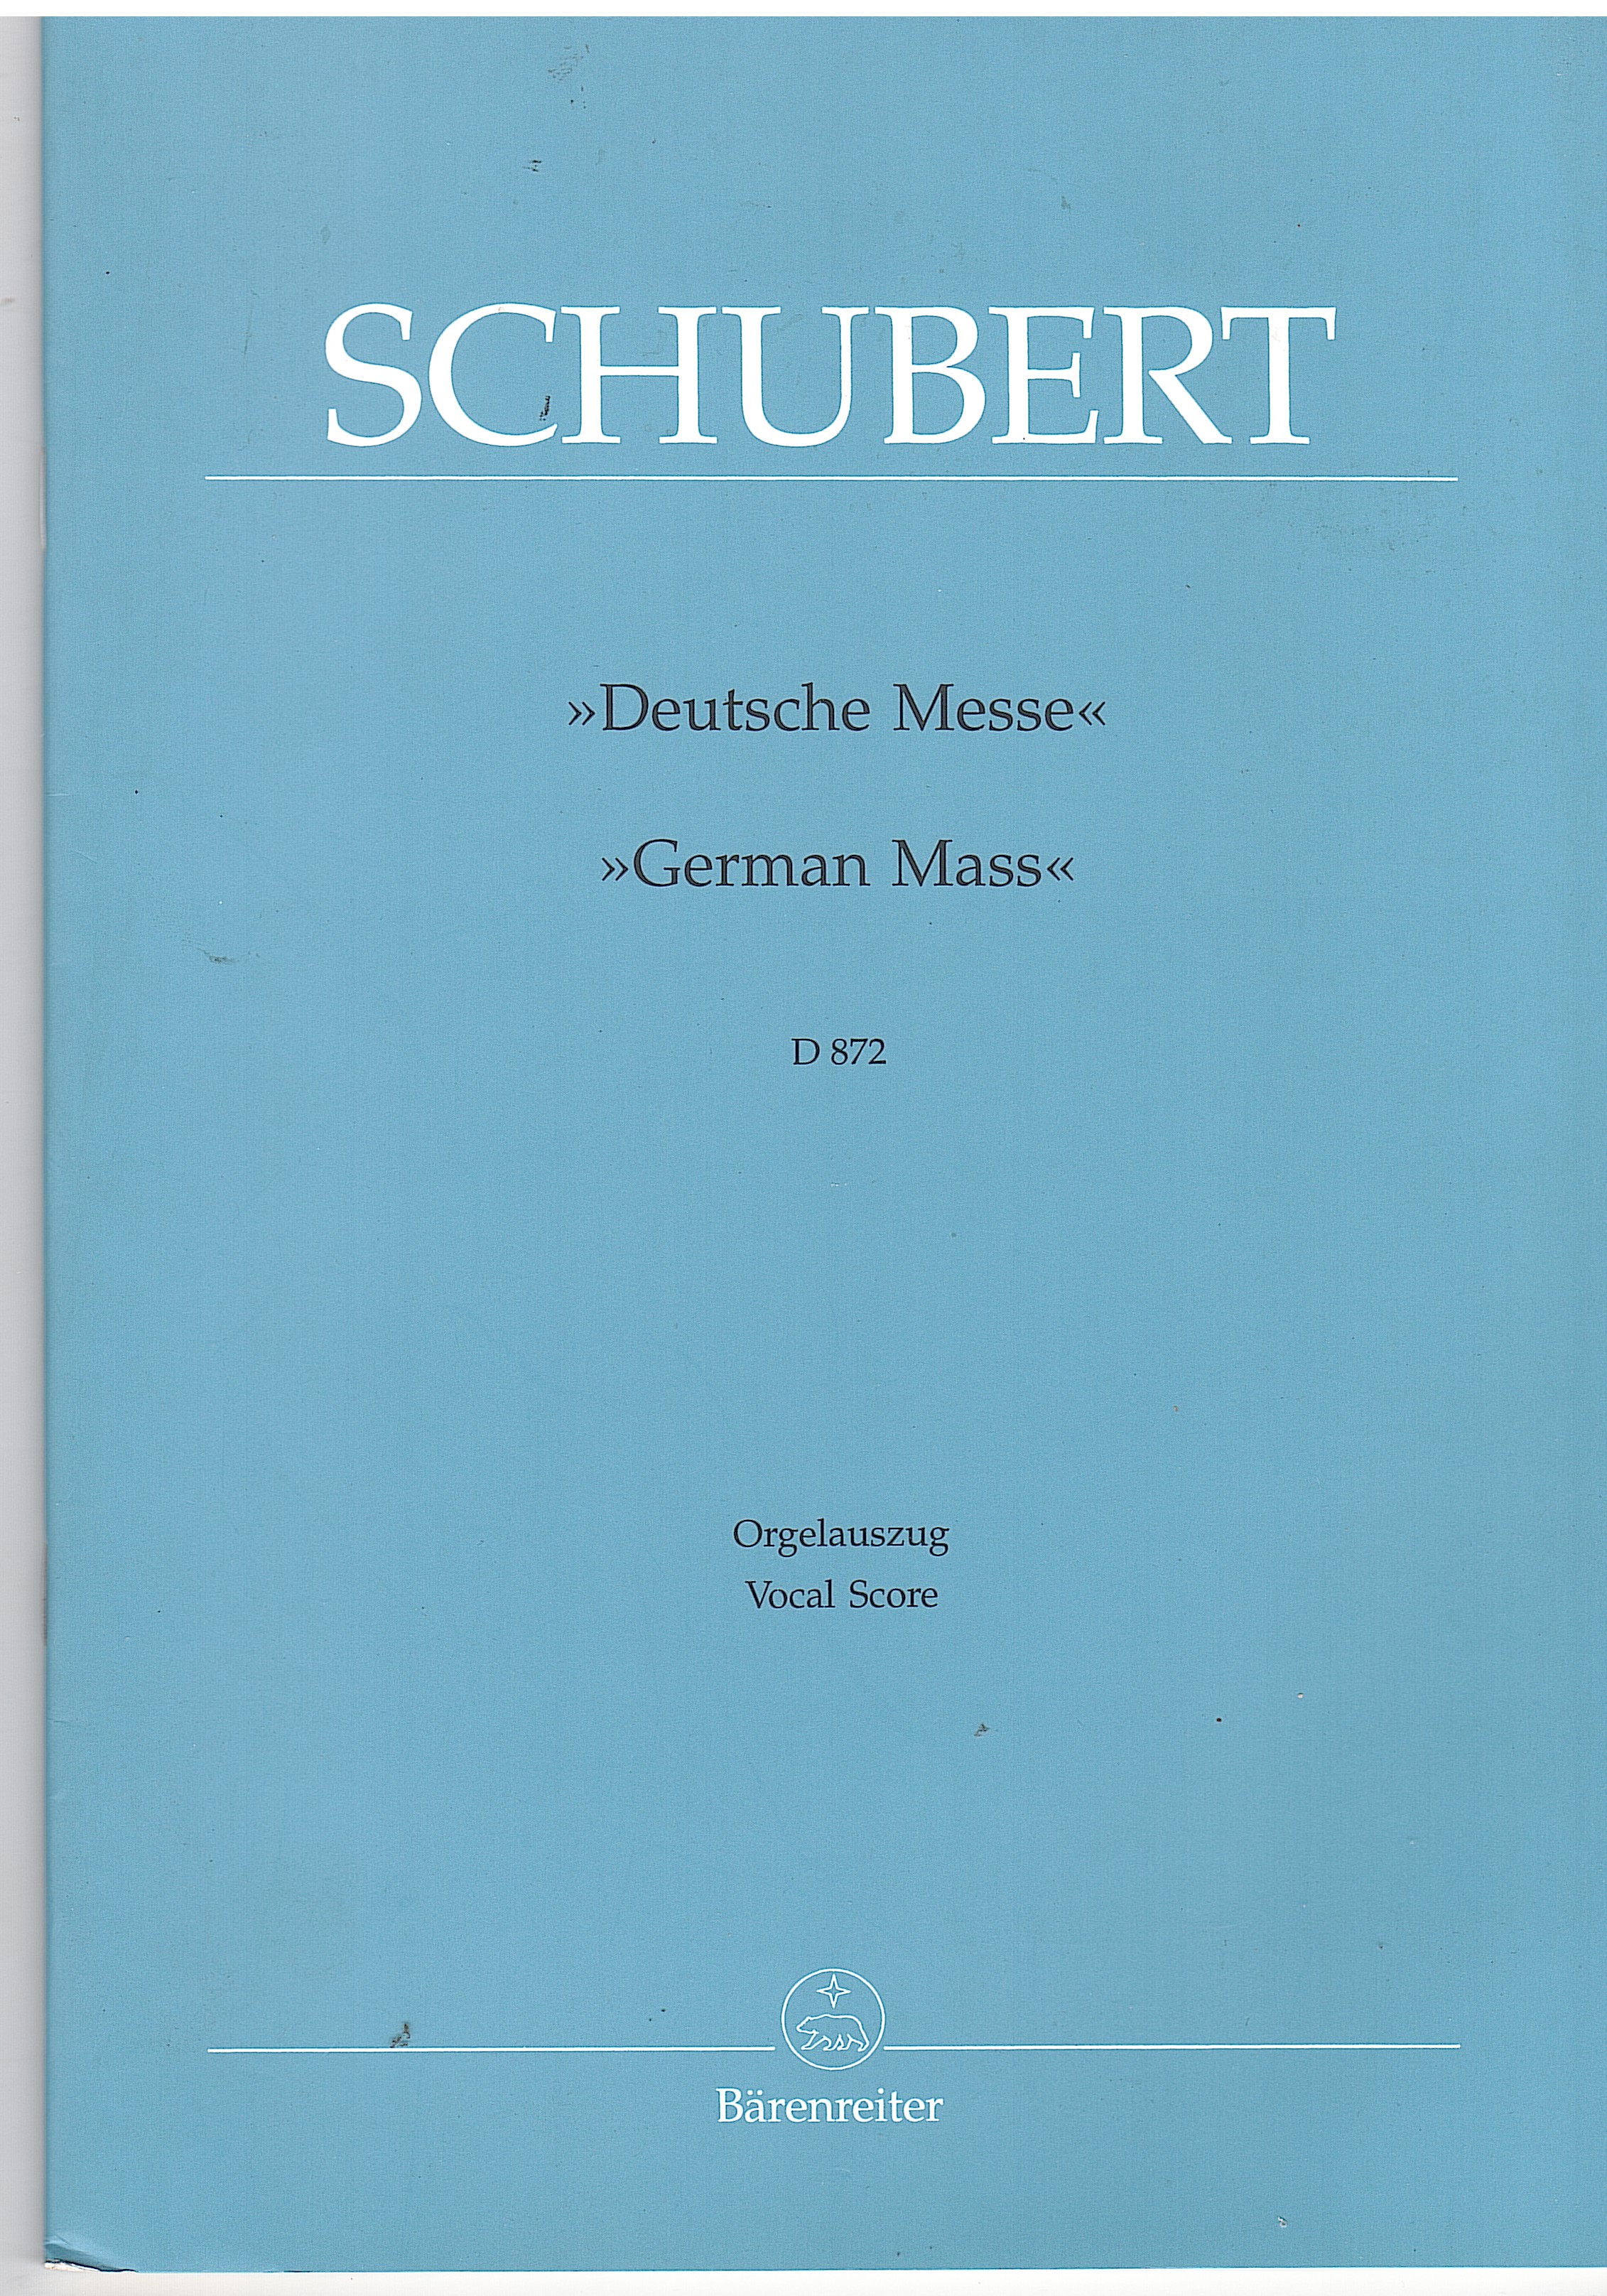 "DEUTSCHE MESSE", "GERMAN MASS" D 872